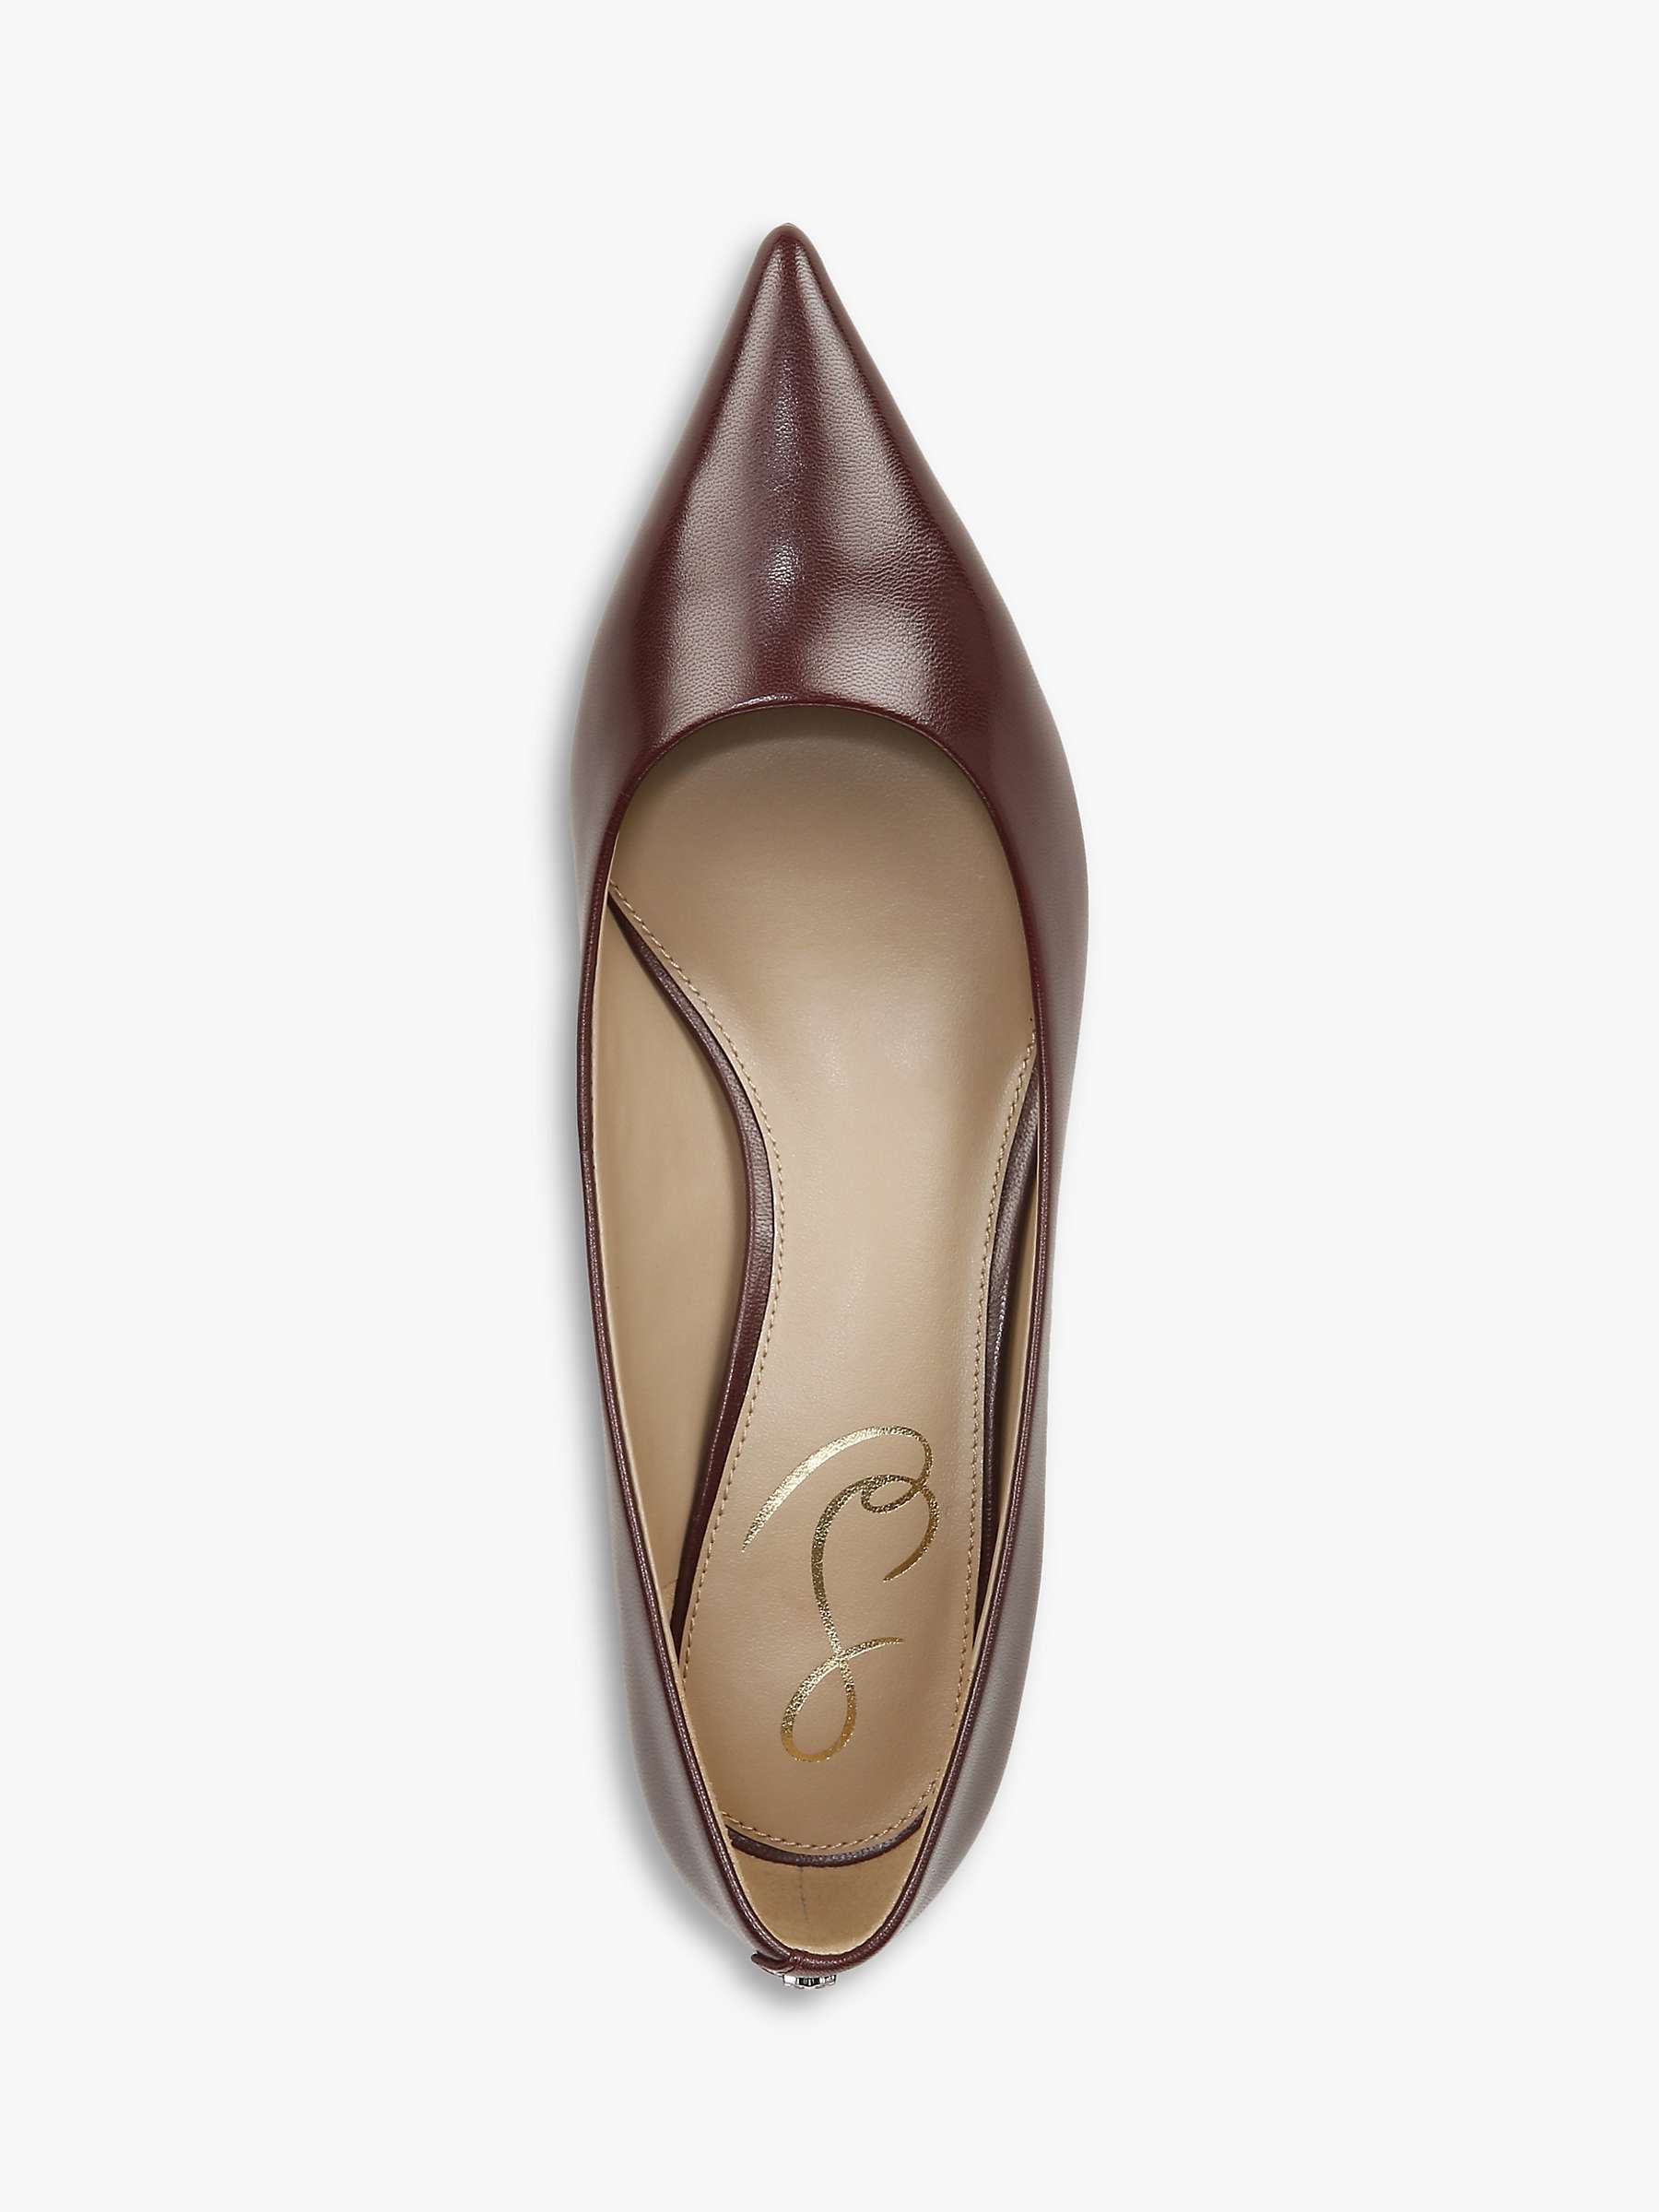 Buy Sam Edelman Franci Kitten Heel Court Shoes Online at johnlewis.com